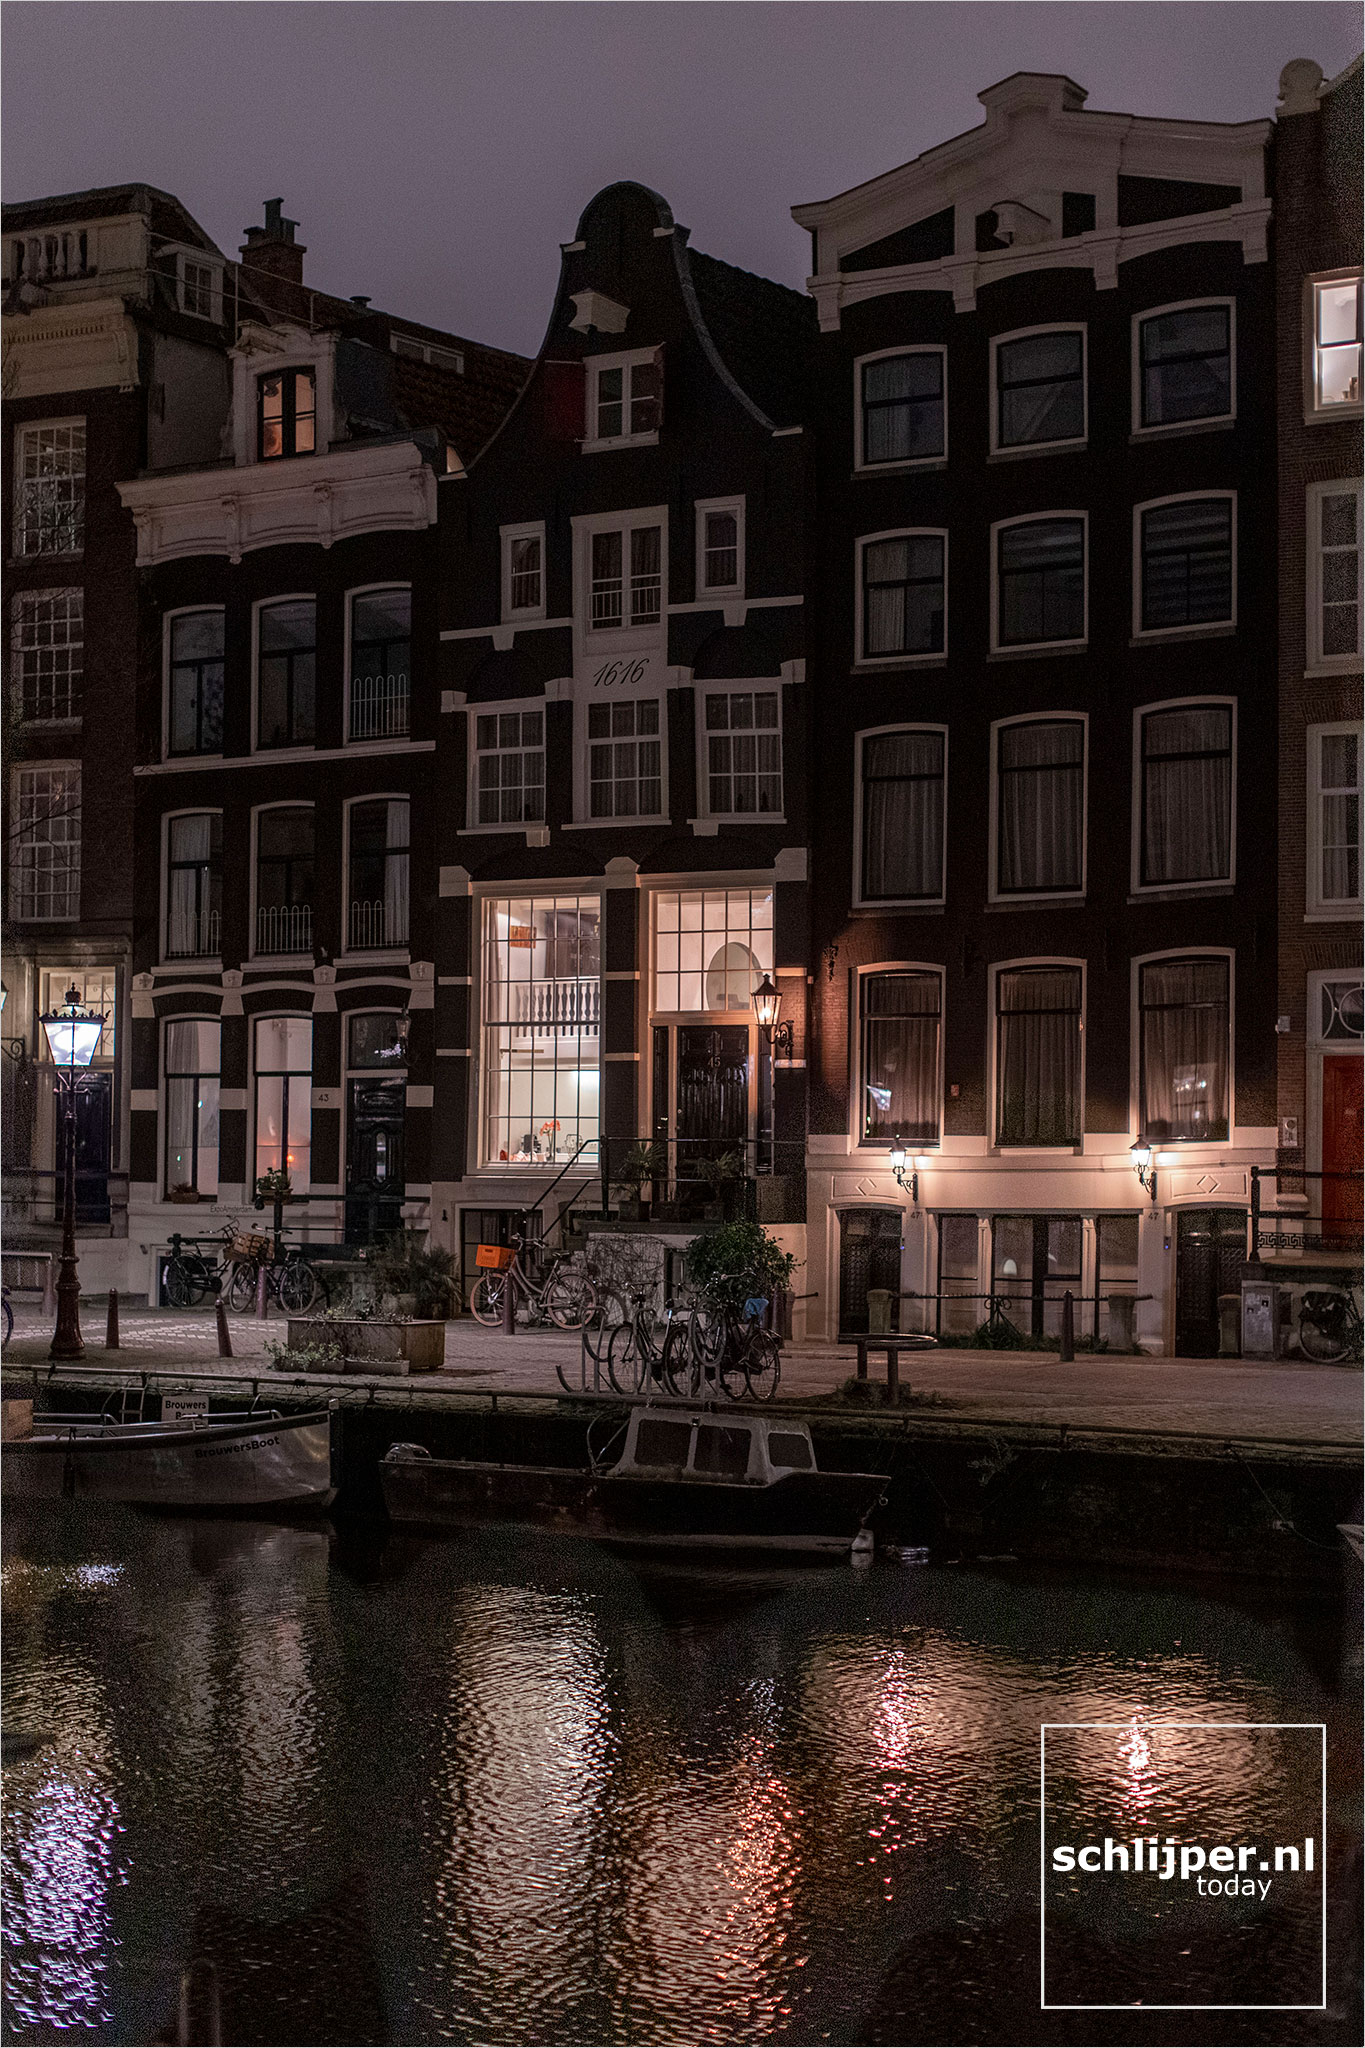 The Netherlands, Amsterdam, 8 januari 2021